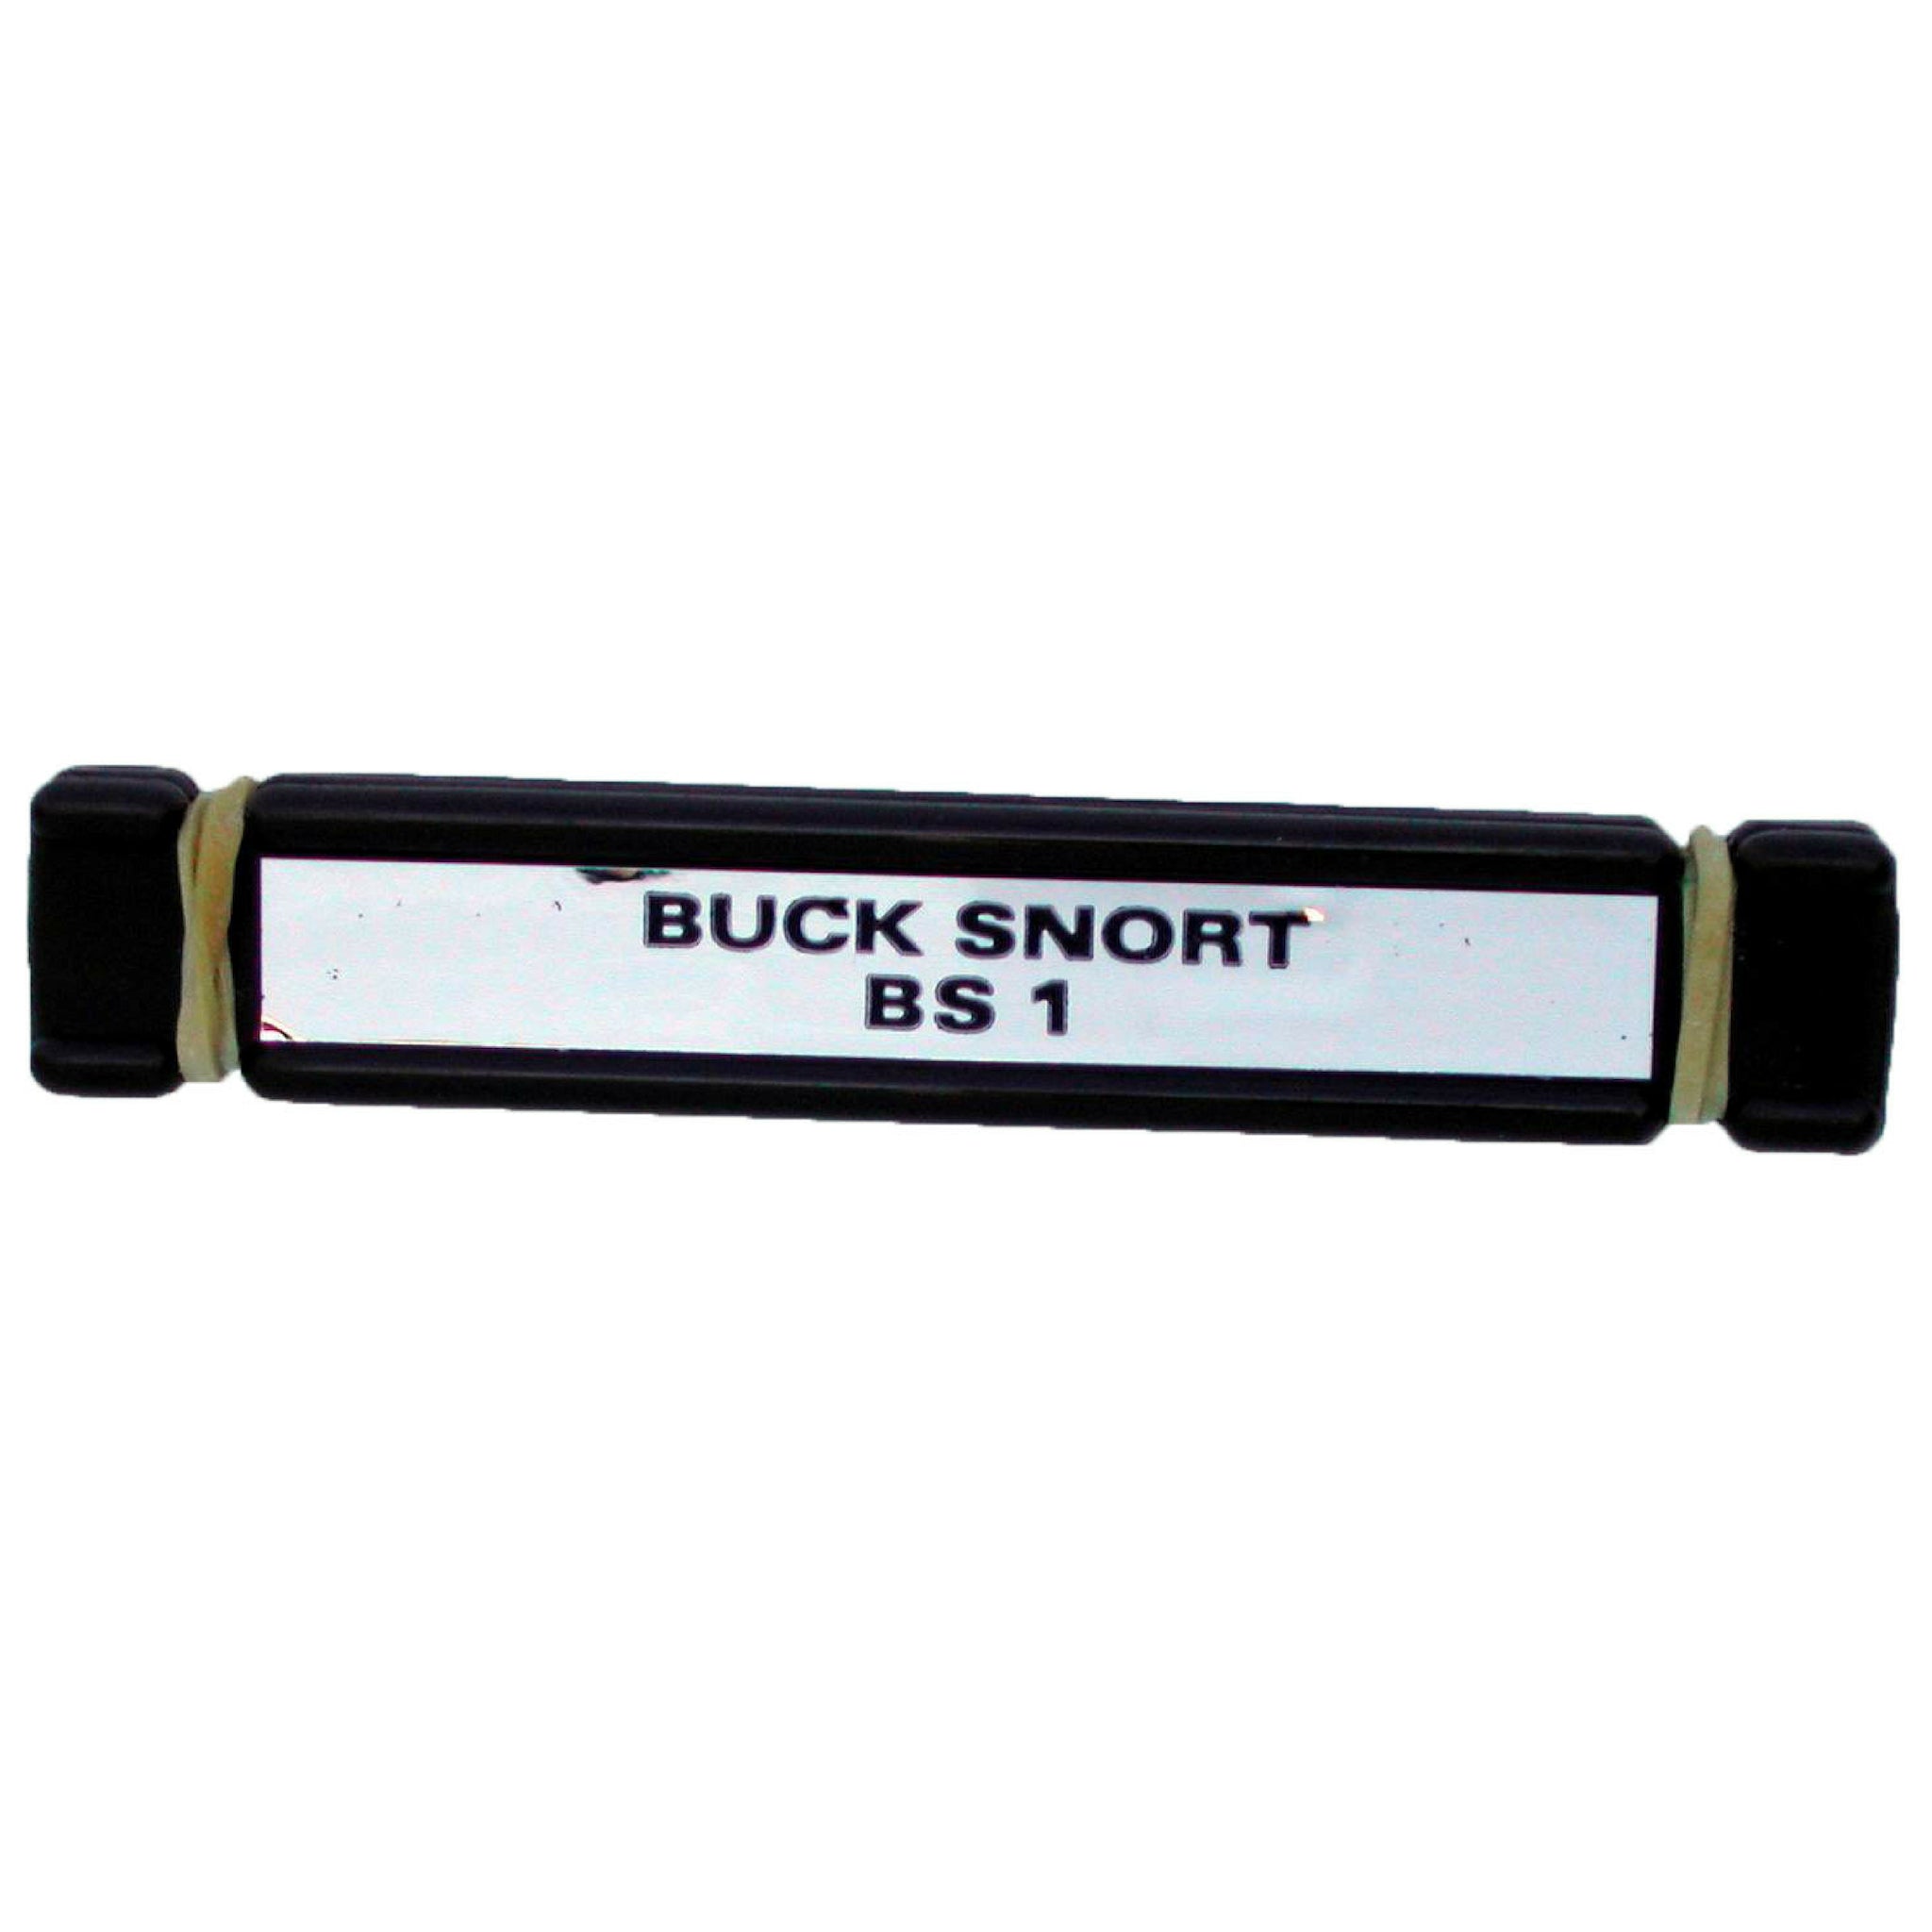 BS-1 Buck Snort by Burnham Brothers - Deer Hunting Calls